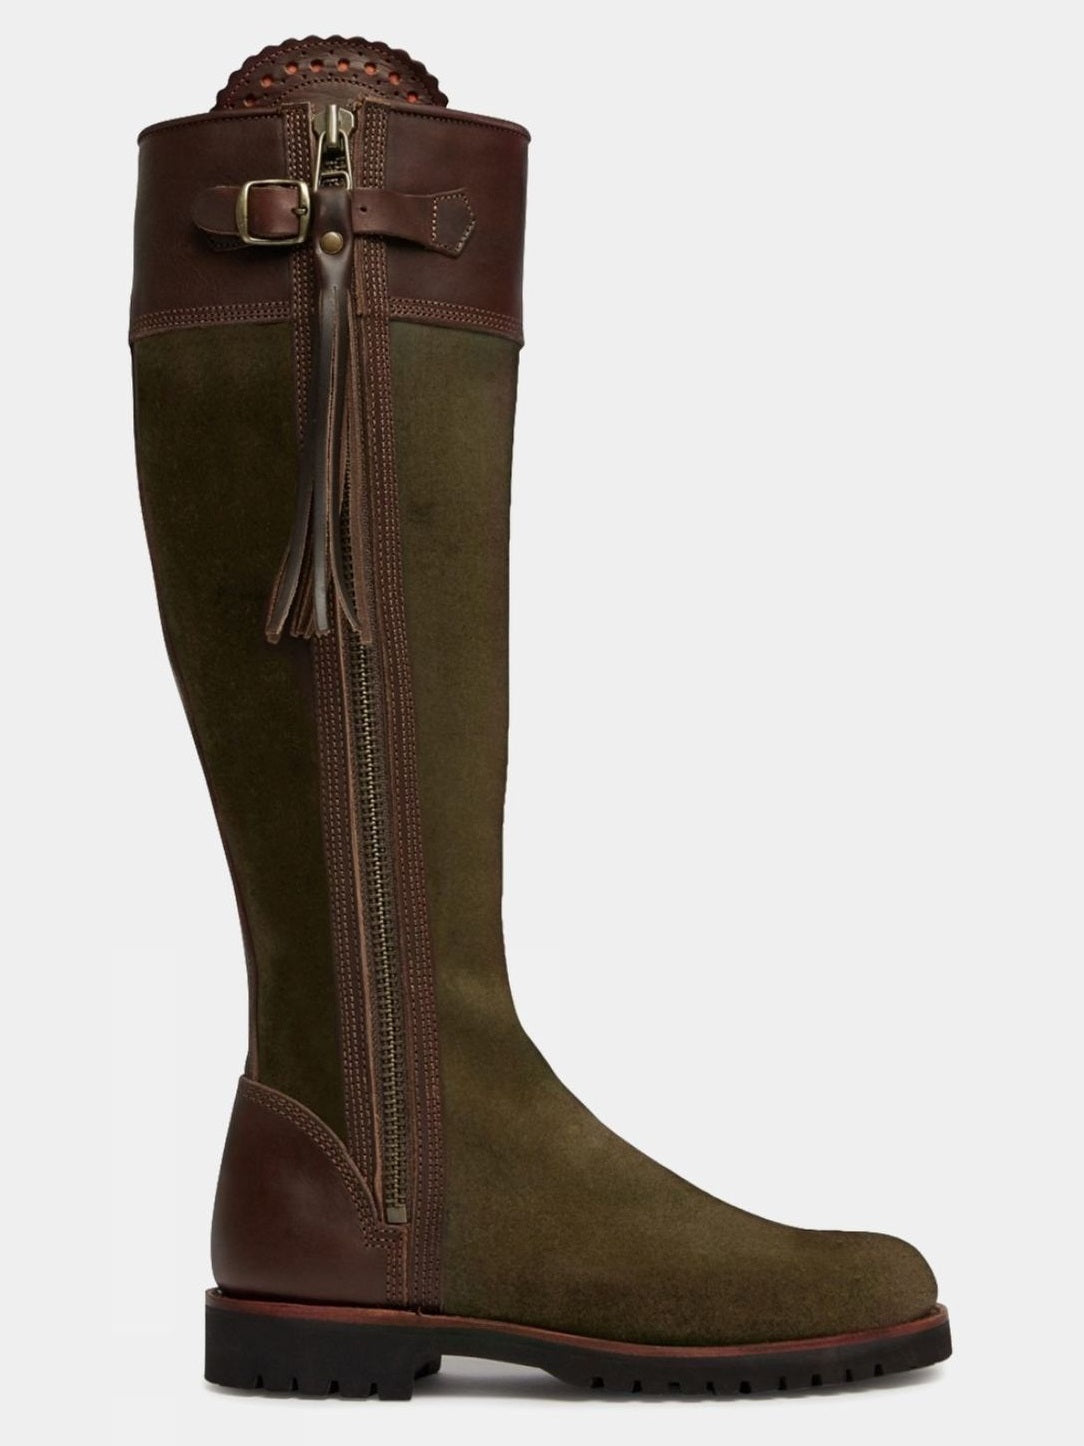 40% OFF PENELOPE CHILVERS Inclement Tassel Boots - Womens Waterproof Suede - Seaweed/Conker - Size 4